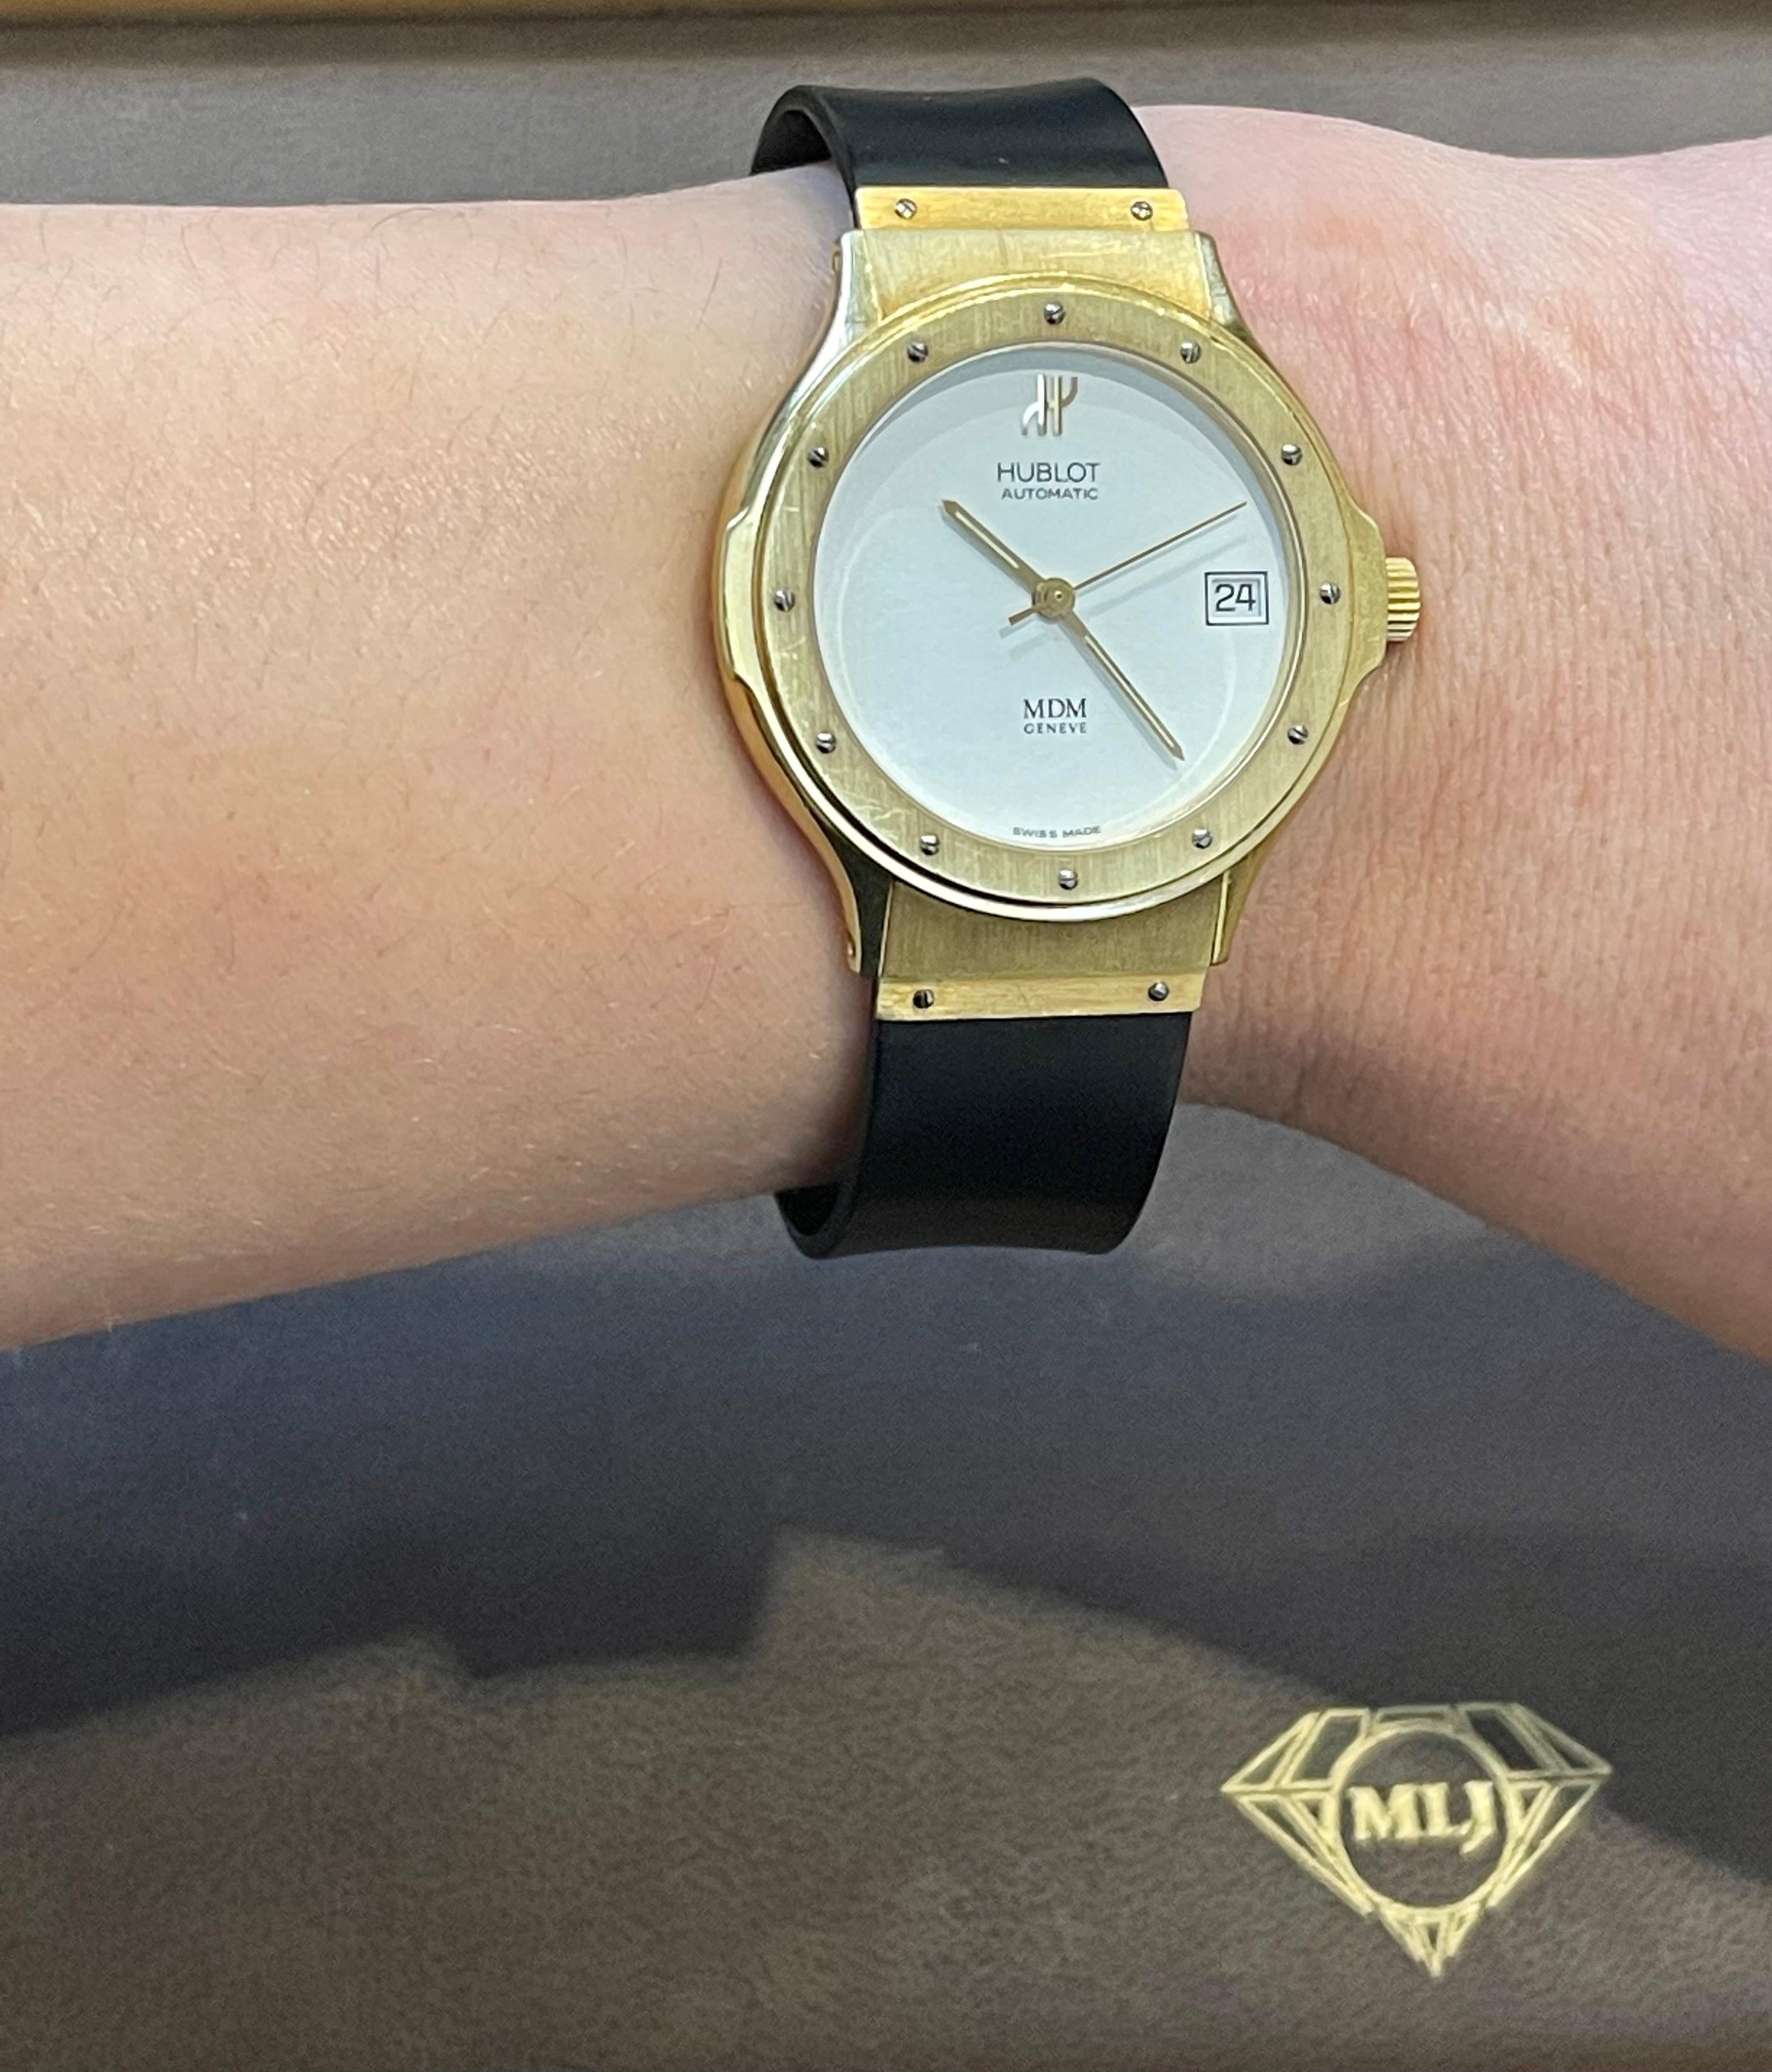 Hublot MDM 1581.3 18 Karat Yellow Gold Unisex Automatic Watch, White Dial For Sale 3